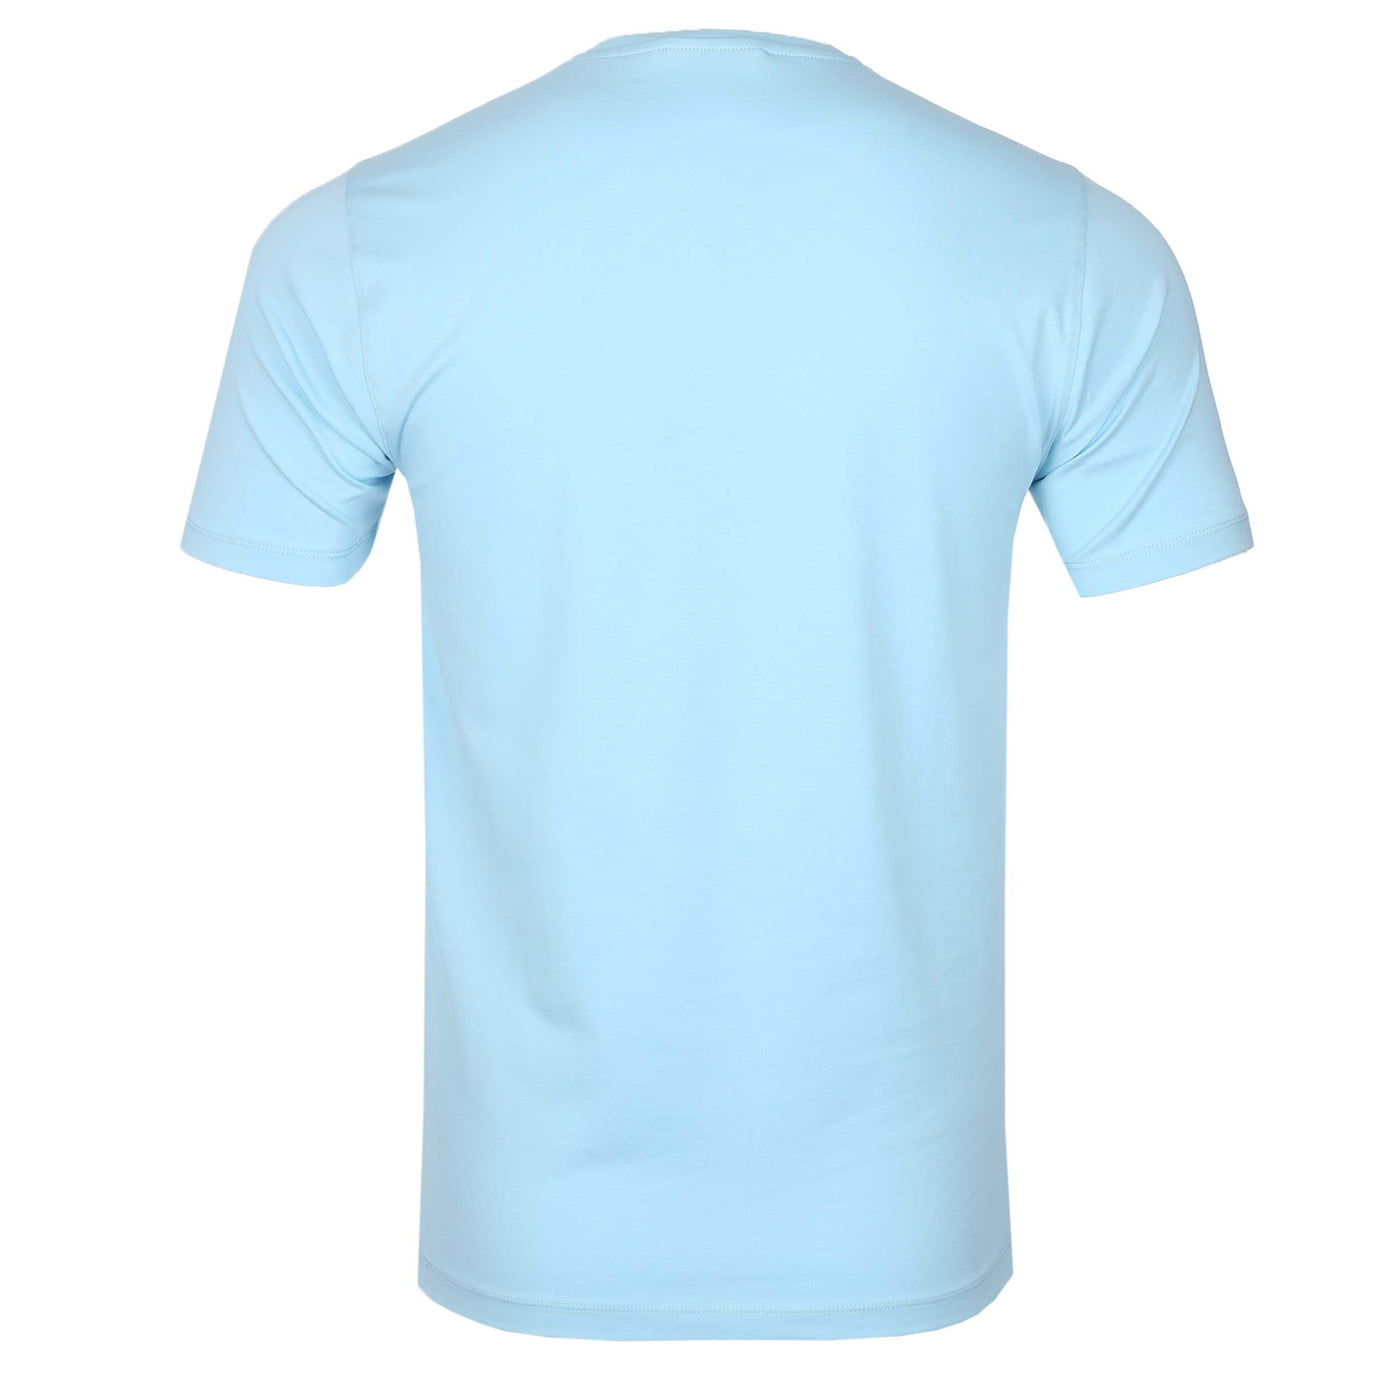 Remus Uomo Basic Crew Neck T Shirt in Sky Blue Back